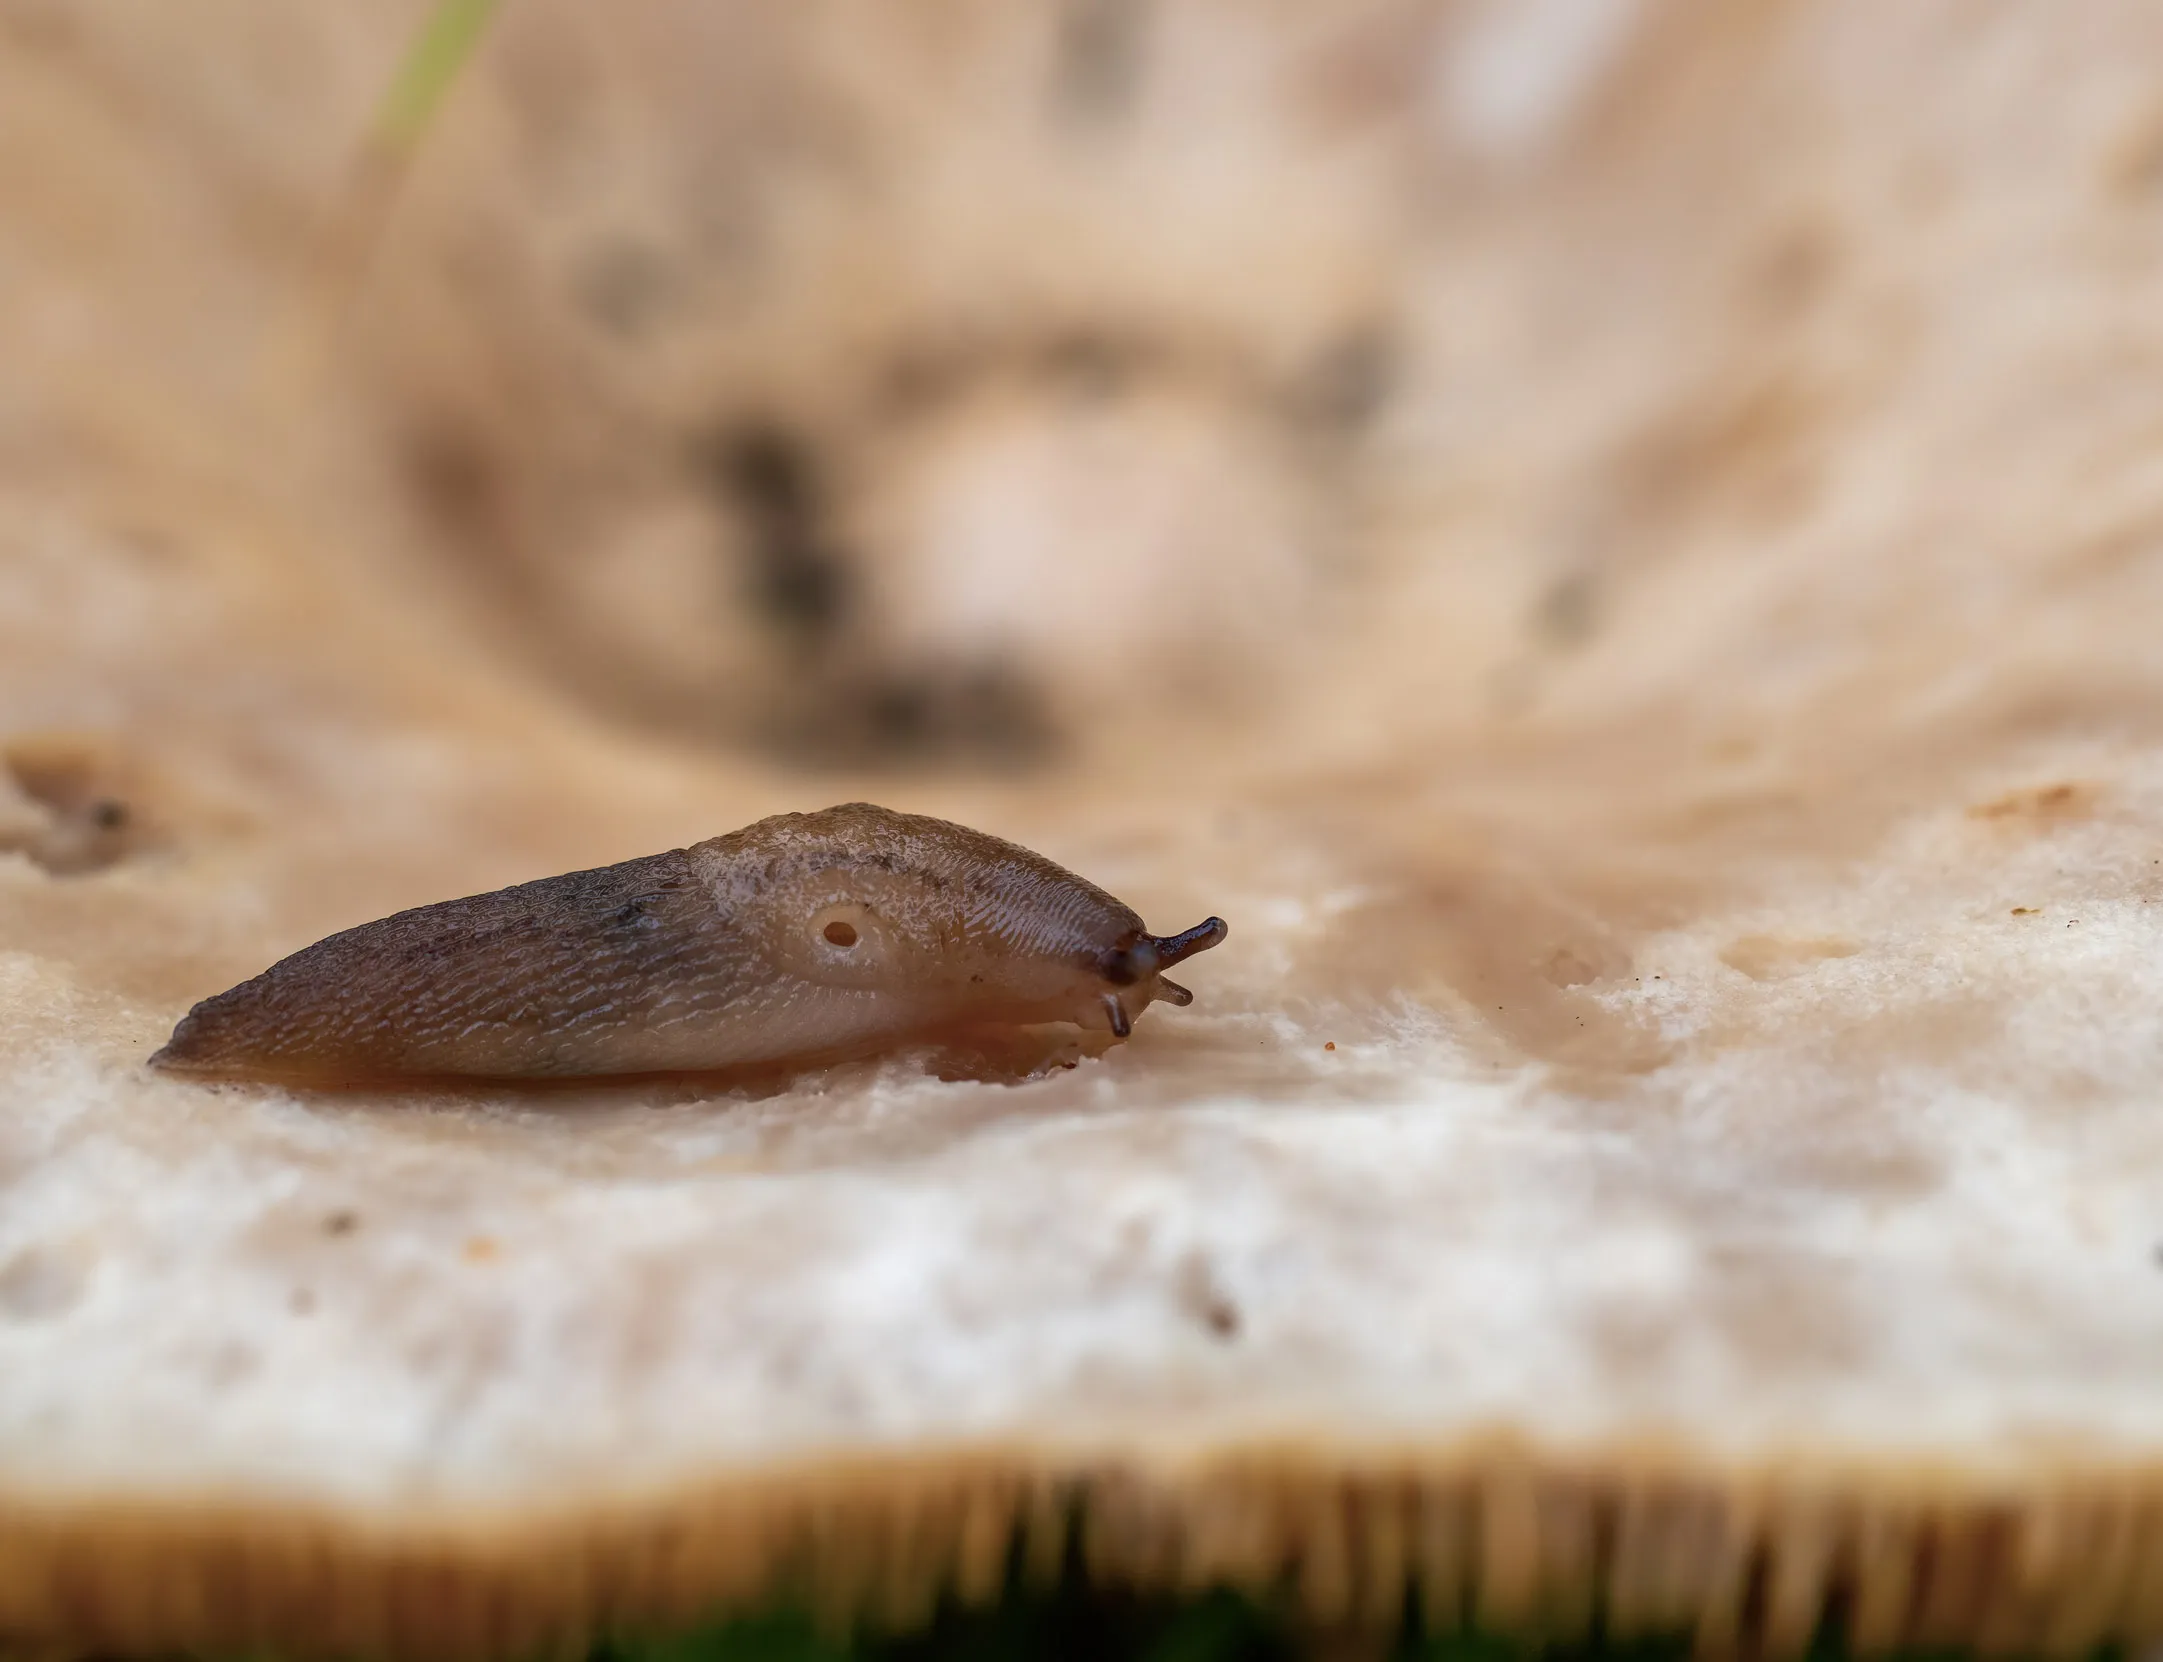 A lone brown Slug moving across the top of a mushroom.